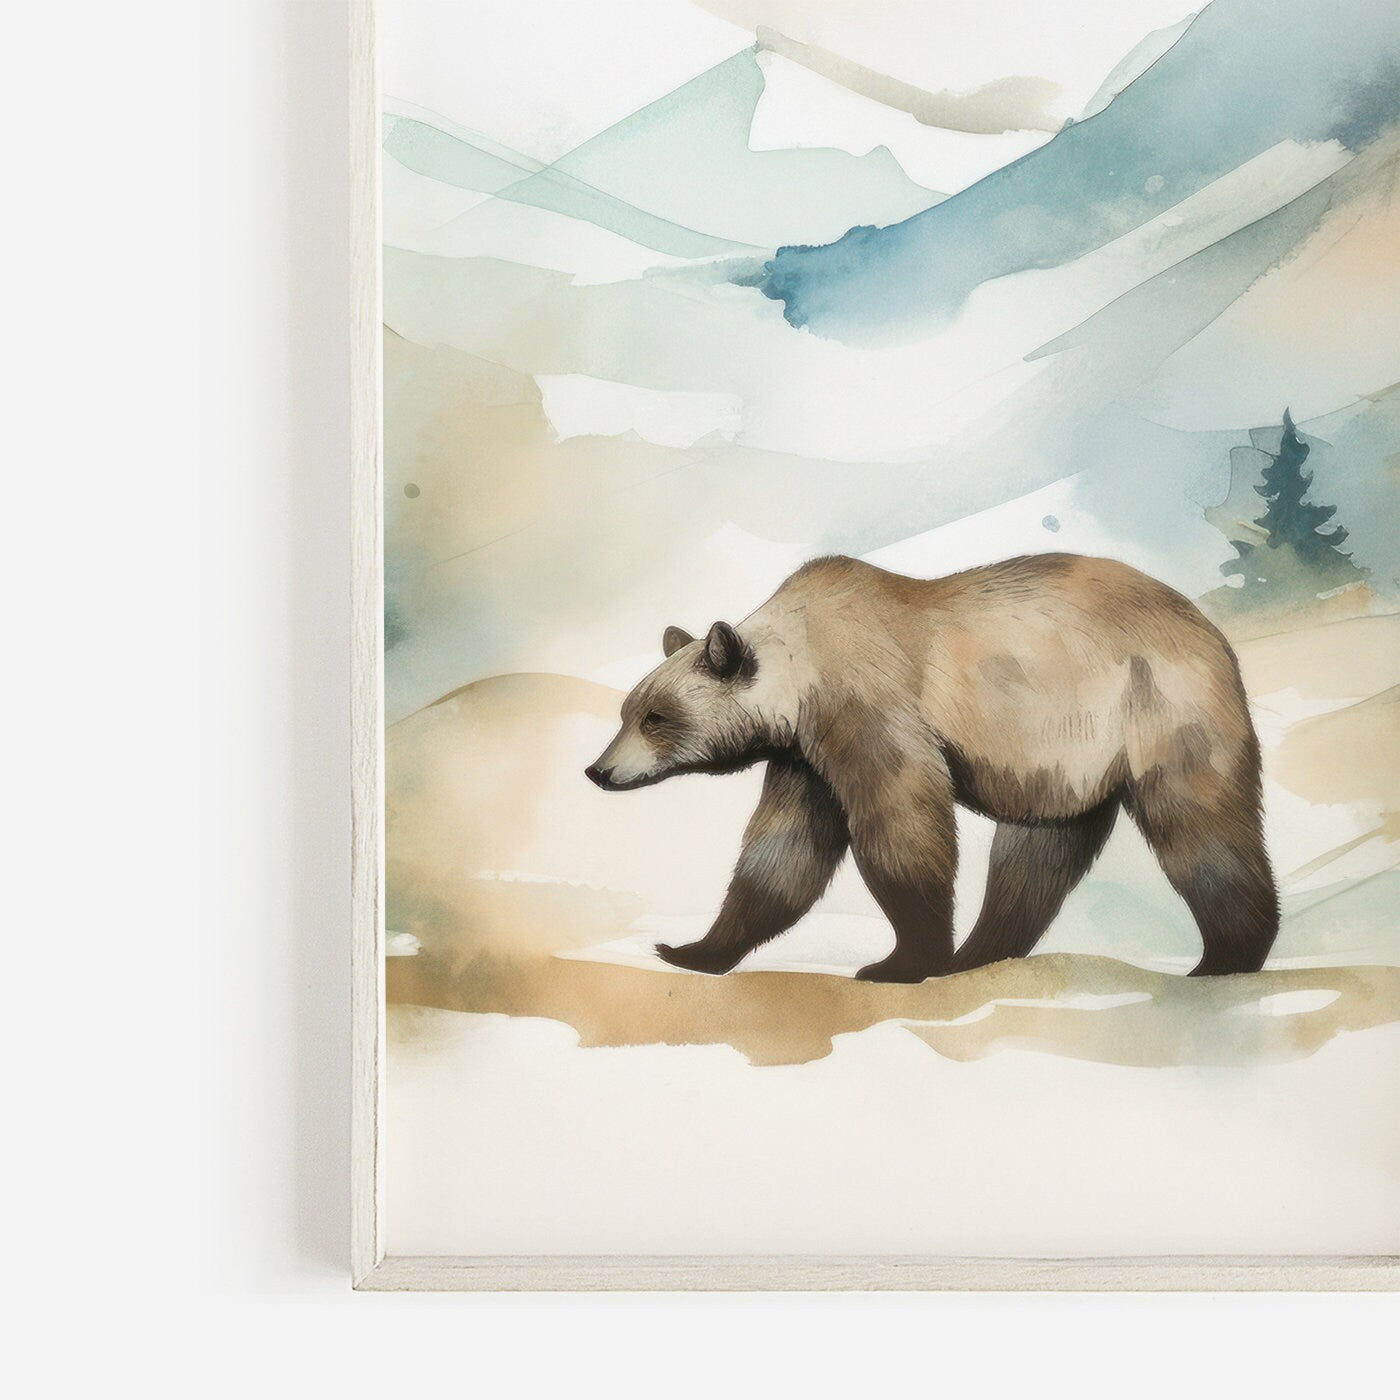 Brown Bear Wall Art, Forest & Mountain Landscape, Nursery Animal Wall Art, Set of 3, Watercolor Art, Digital Printable Decor